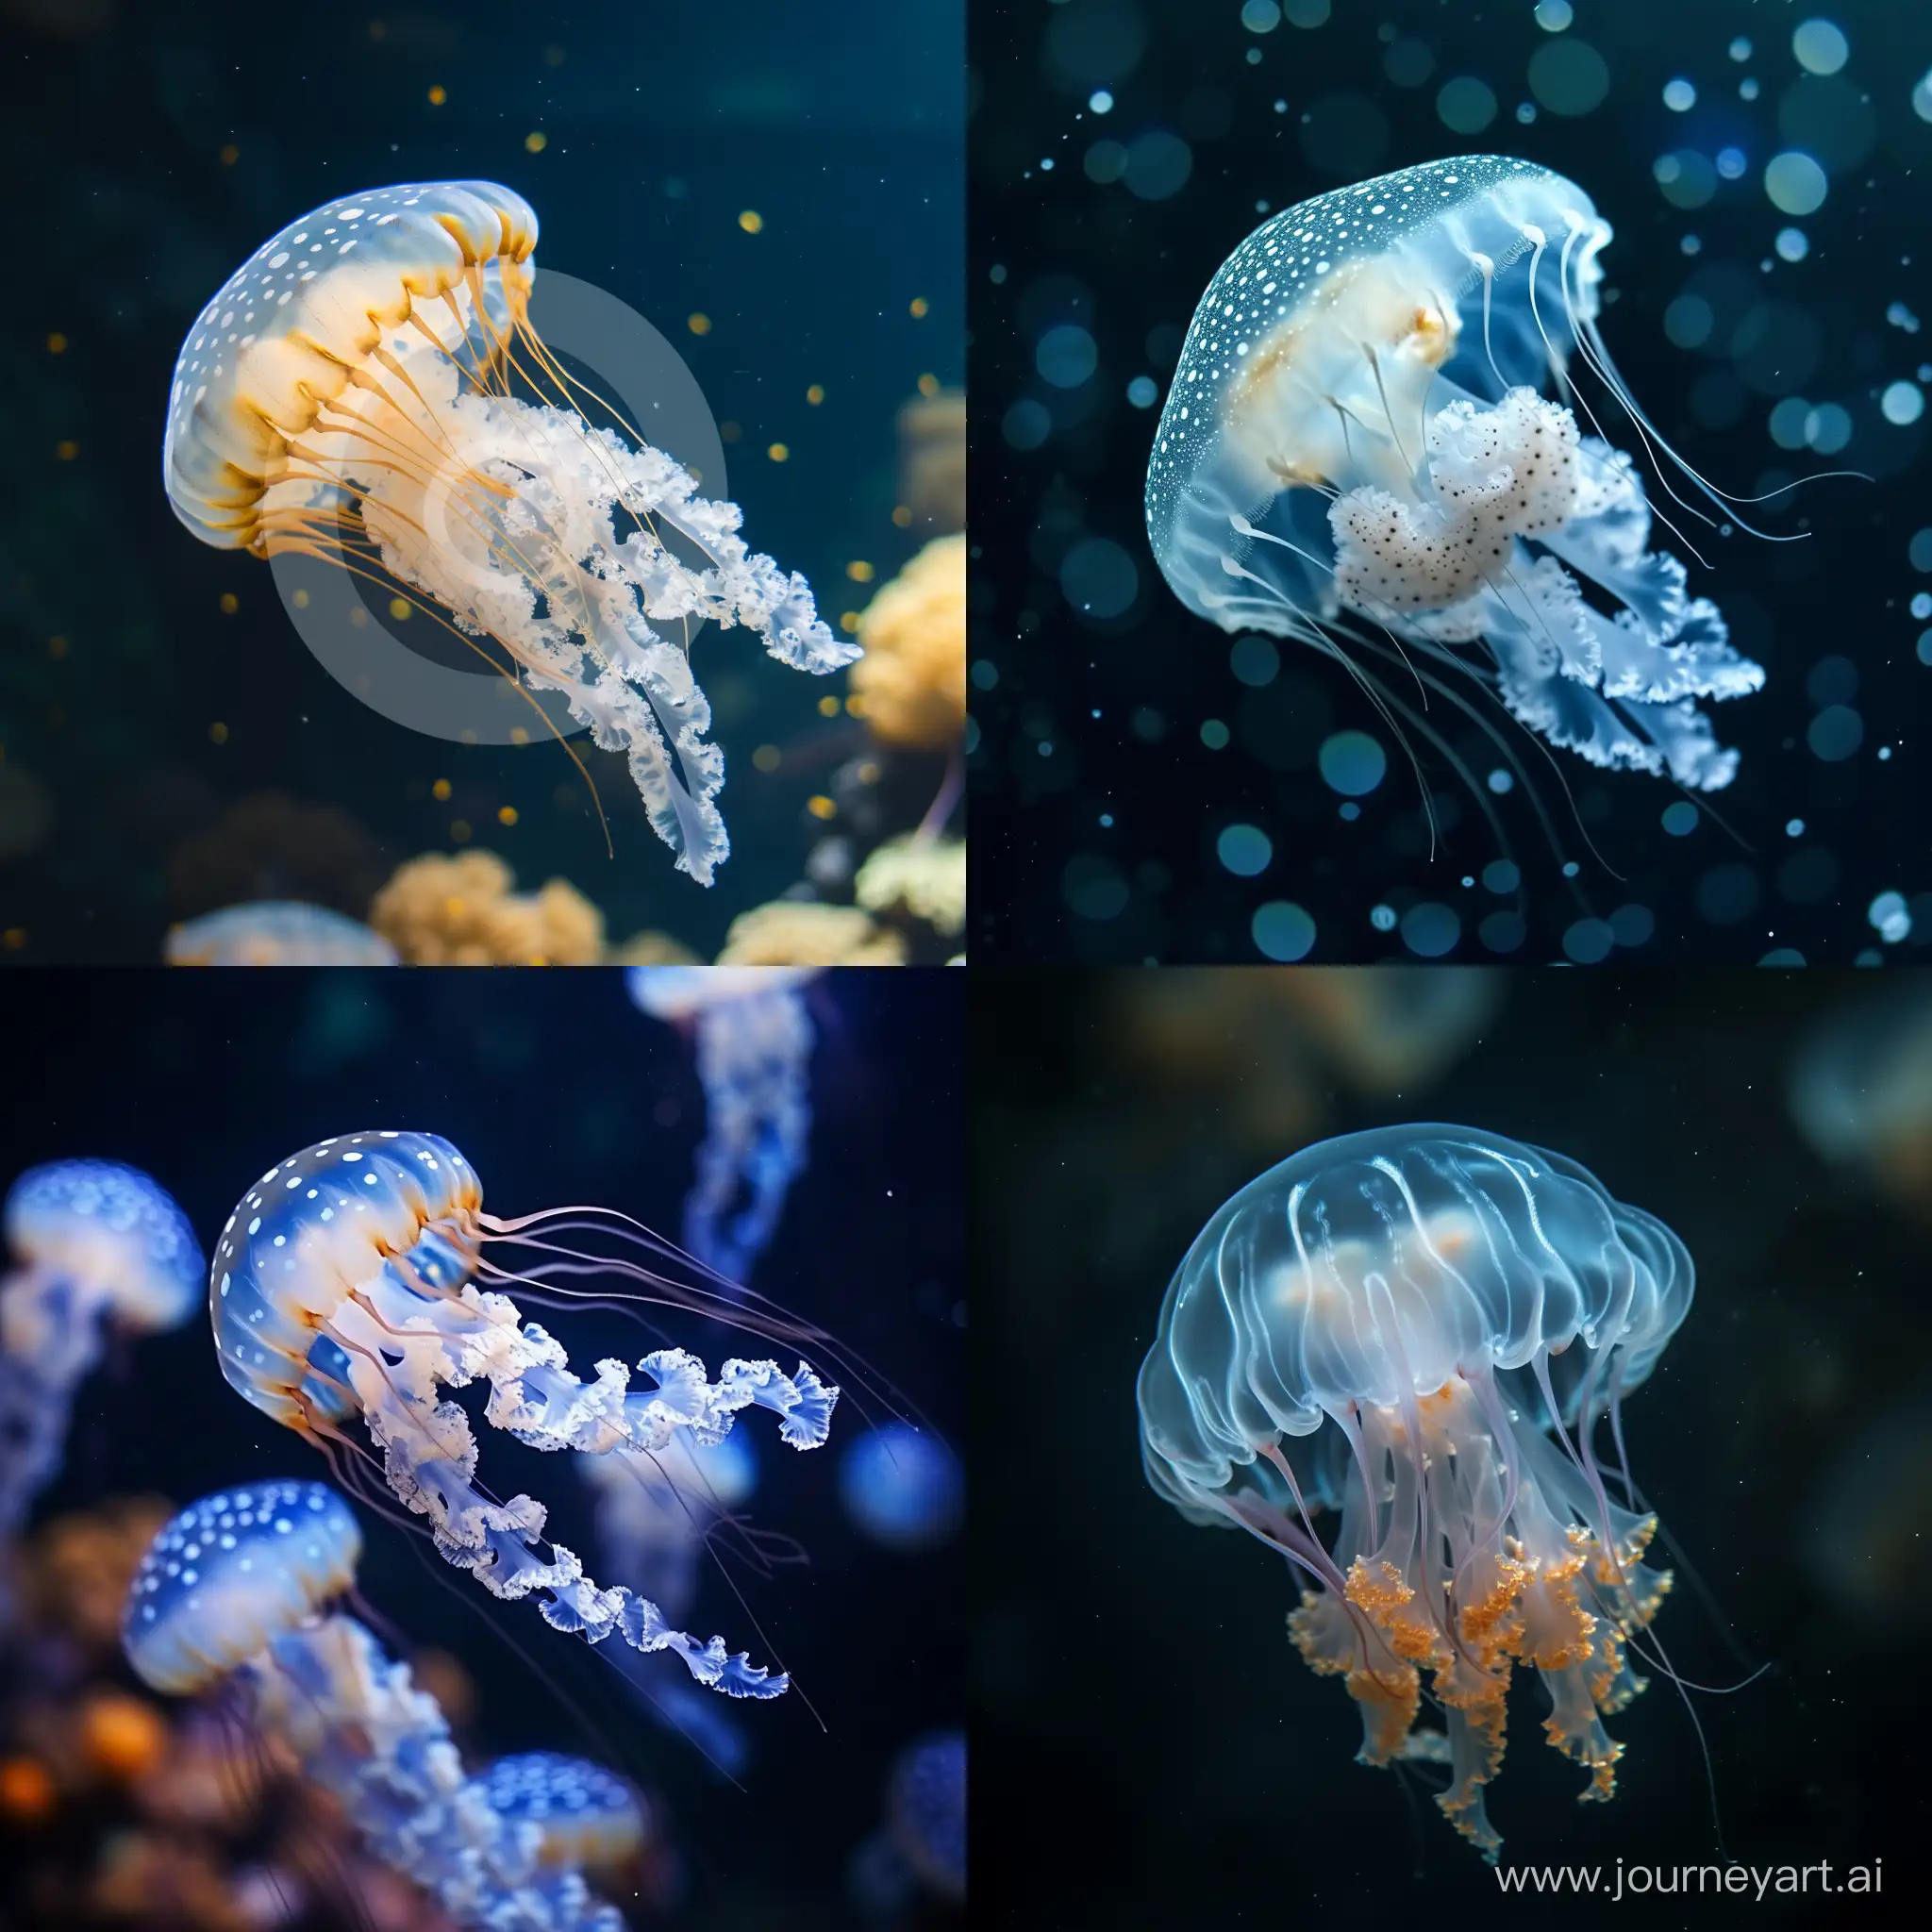 jellyfish is not jellyfish